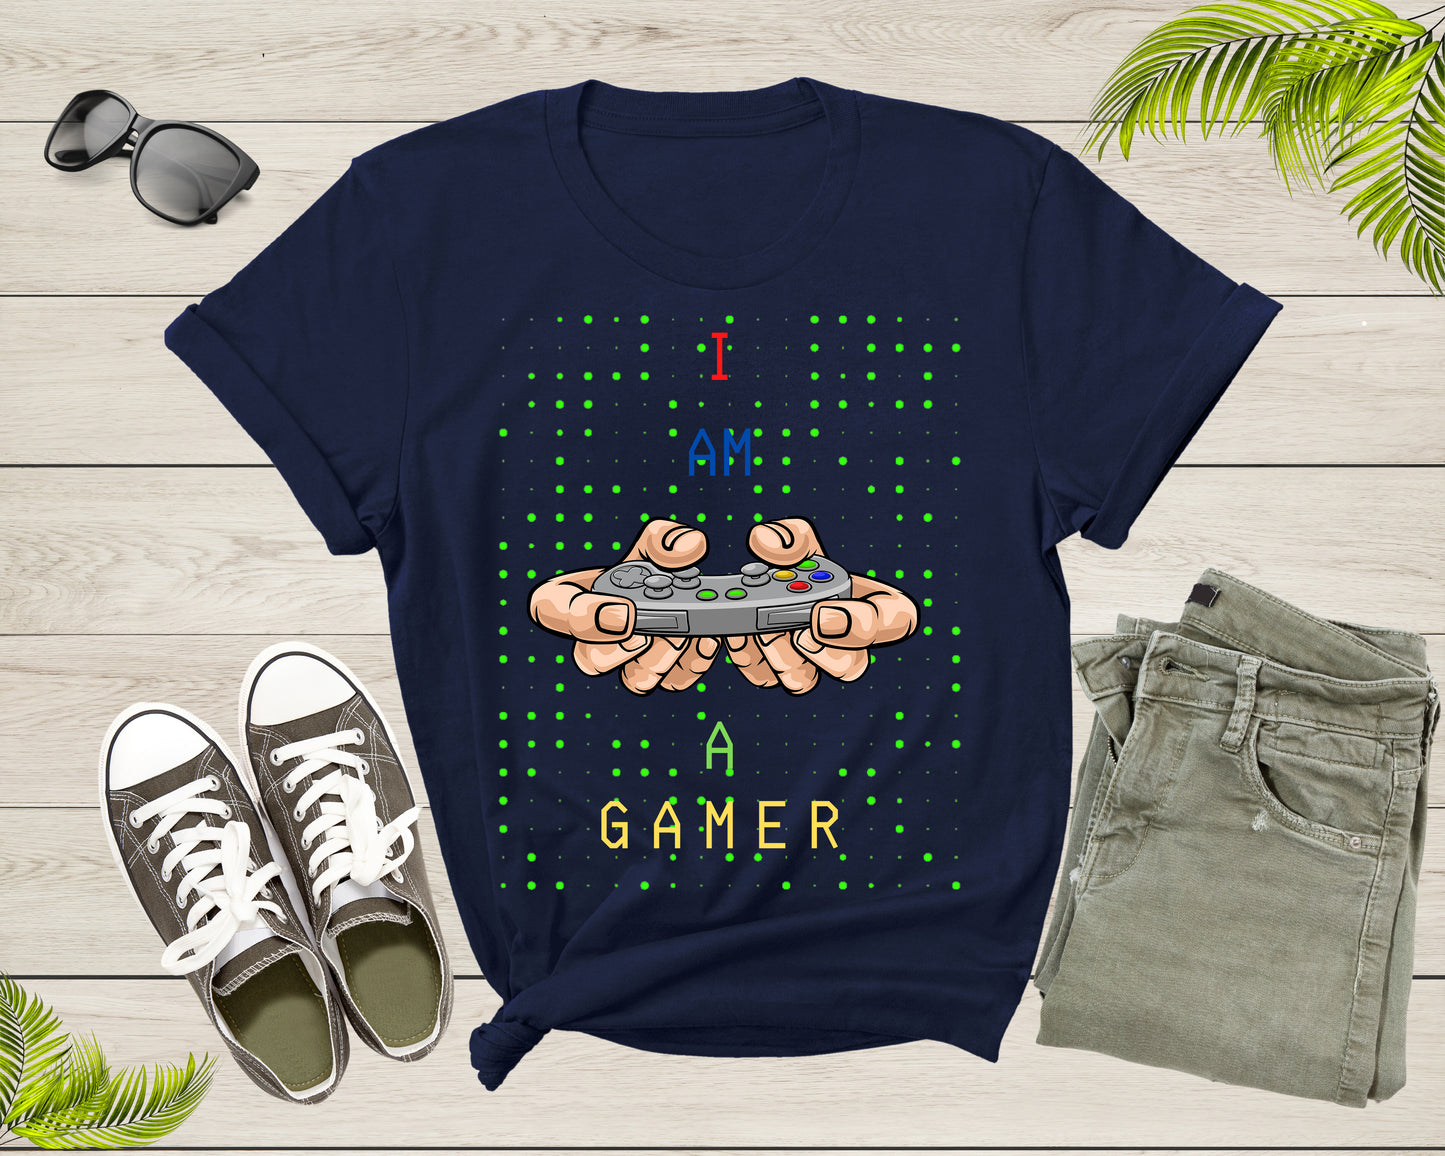 I am a Gamer Video Game Player Computer Game Controller T-Shirt Game Play Lover T Shirt Gift for Men Women Kids Boys Girls Tshirt